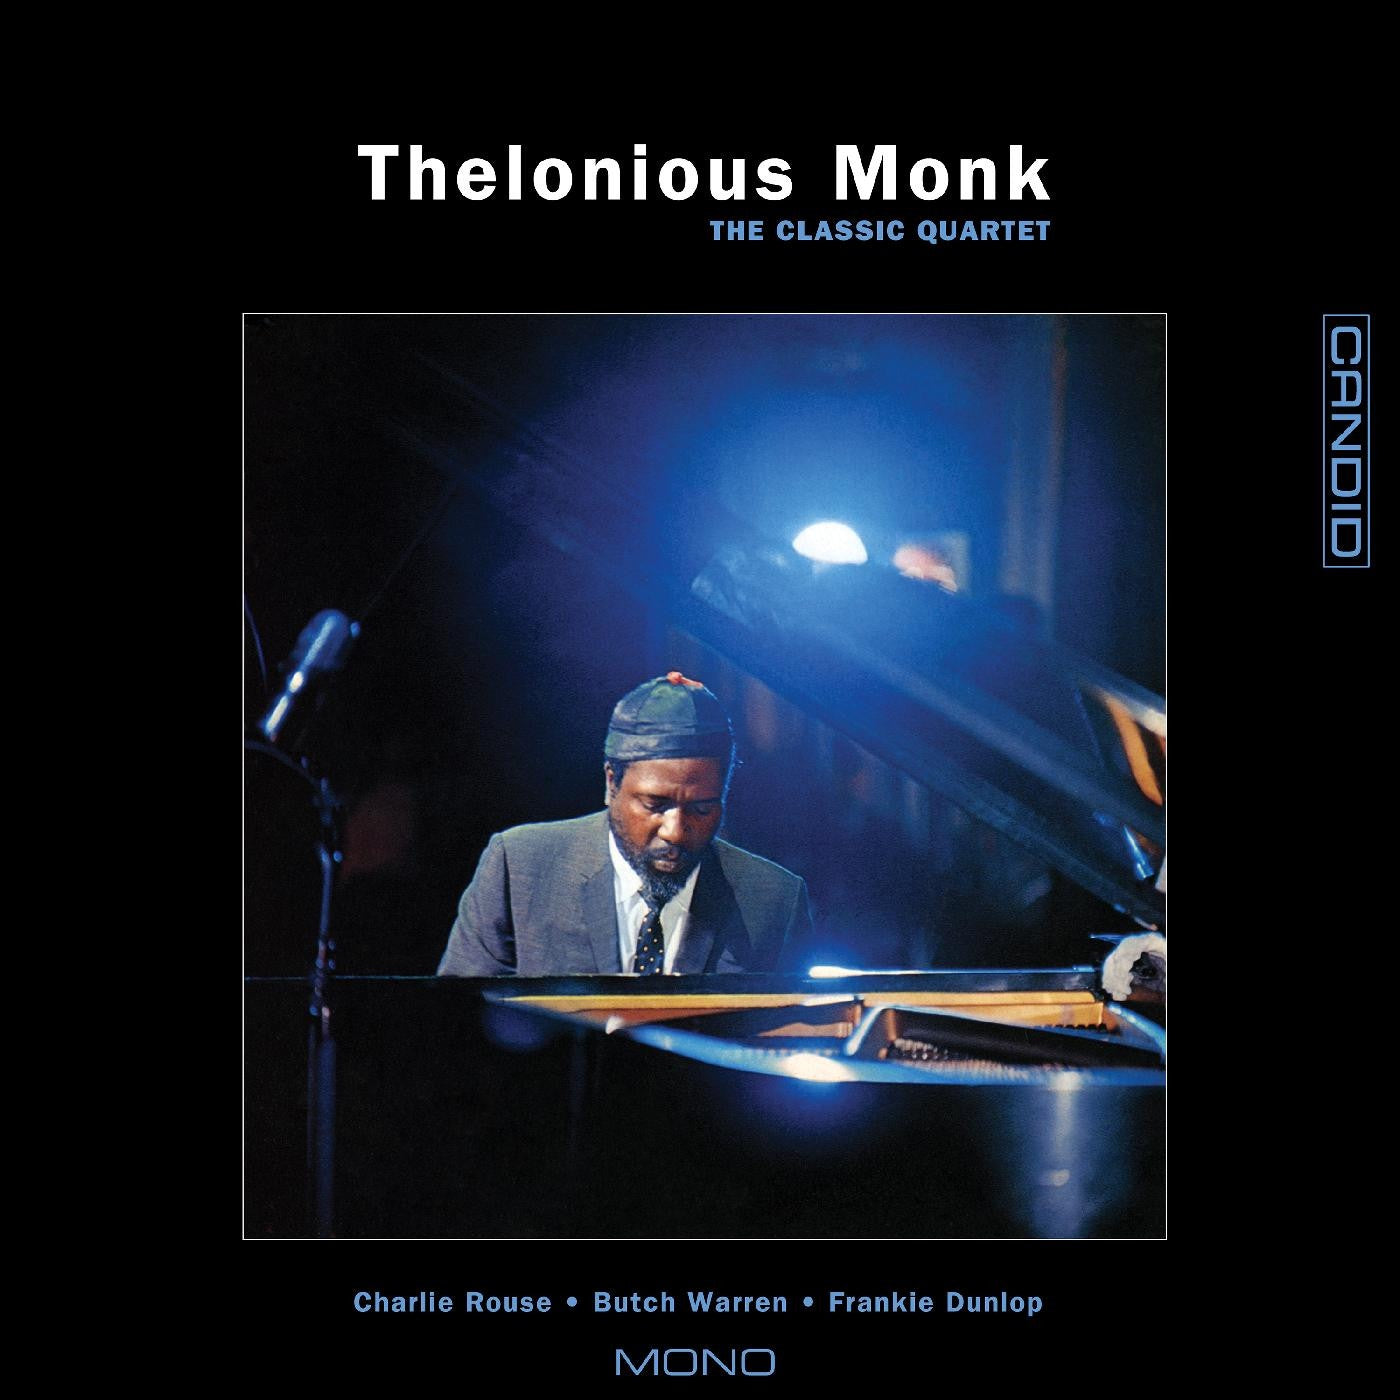 Thelonious Monk – The Classic Quartet (1983) - New LP Record 2023 Candid 180 Gram Vinyl - Jazz / Hard Bop